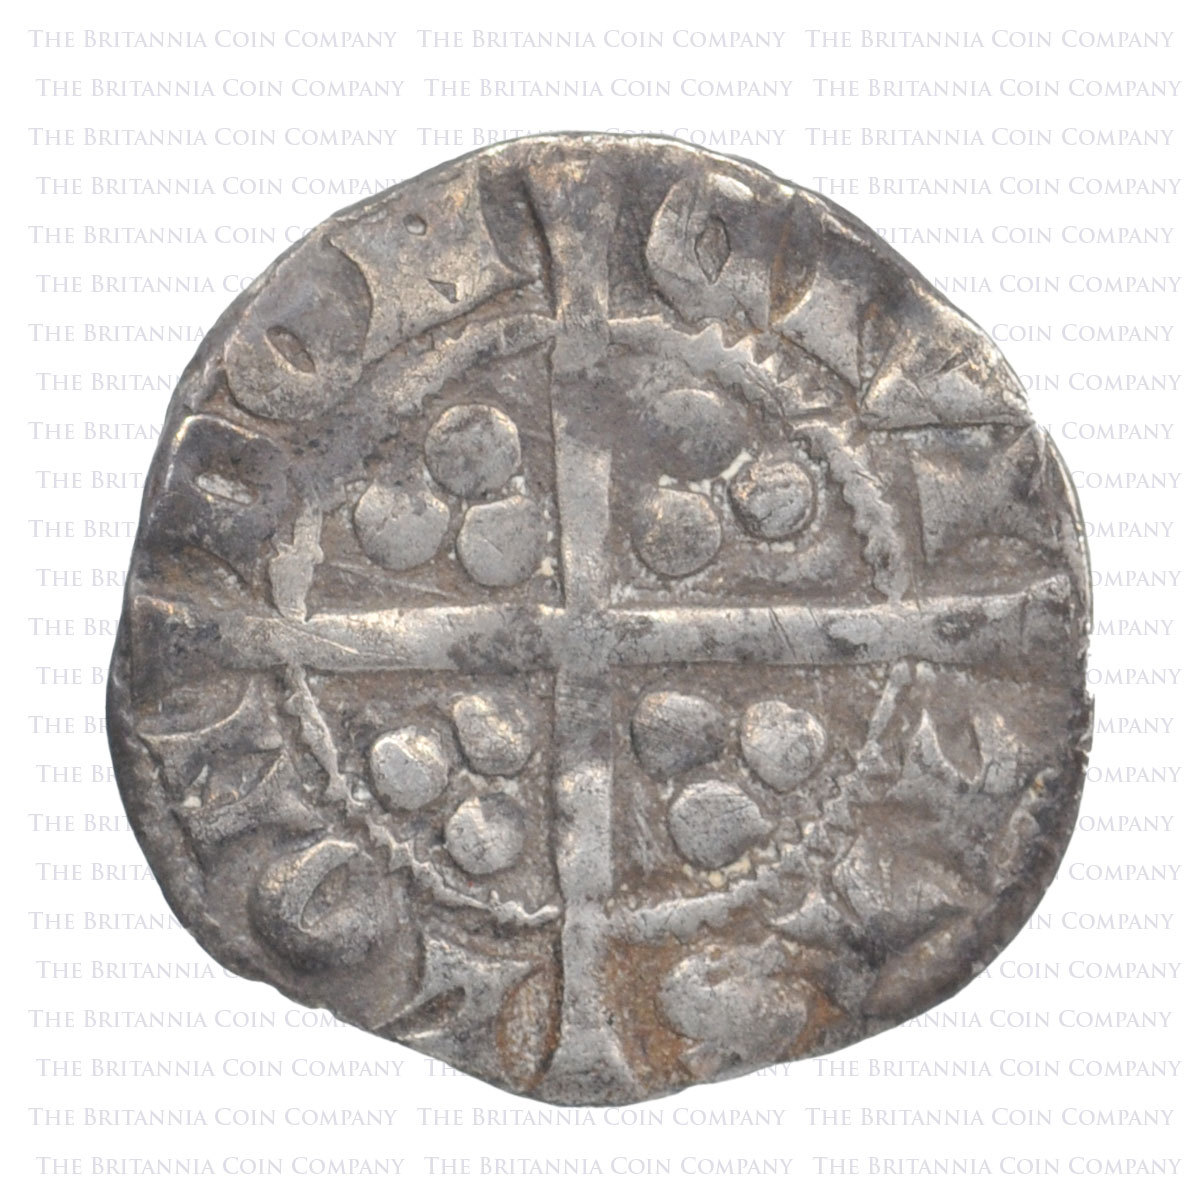 1307-27 Edward II Hammered Silver Penny. London